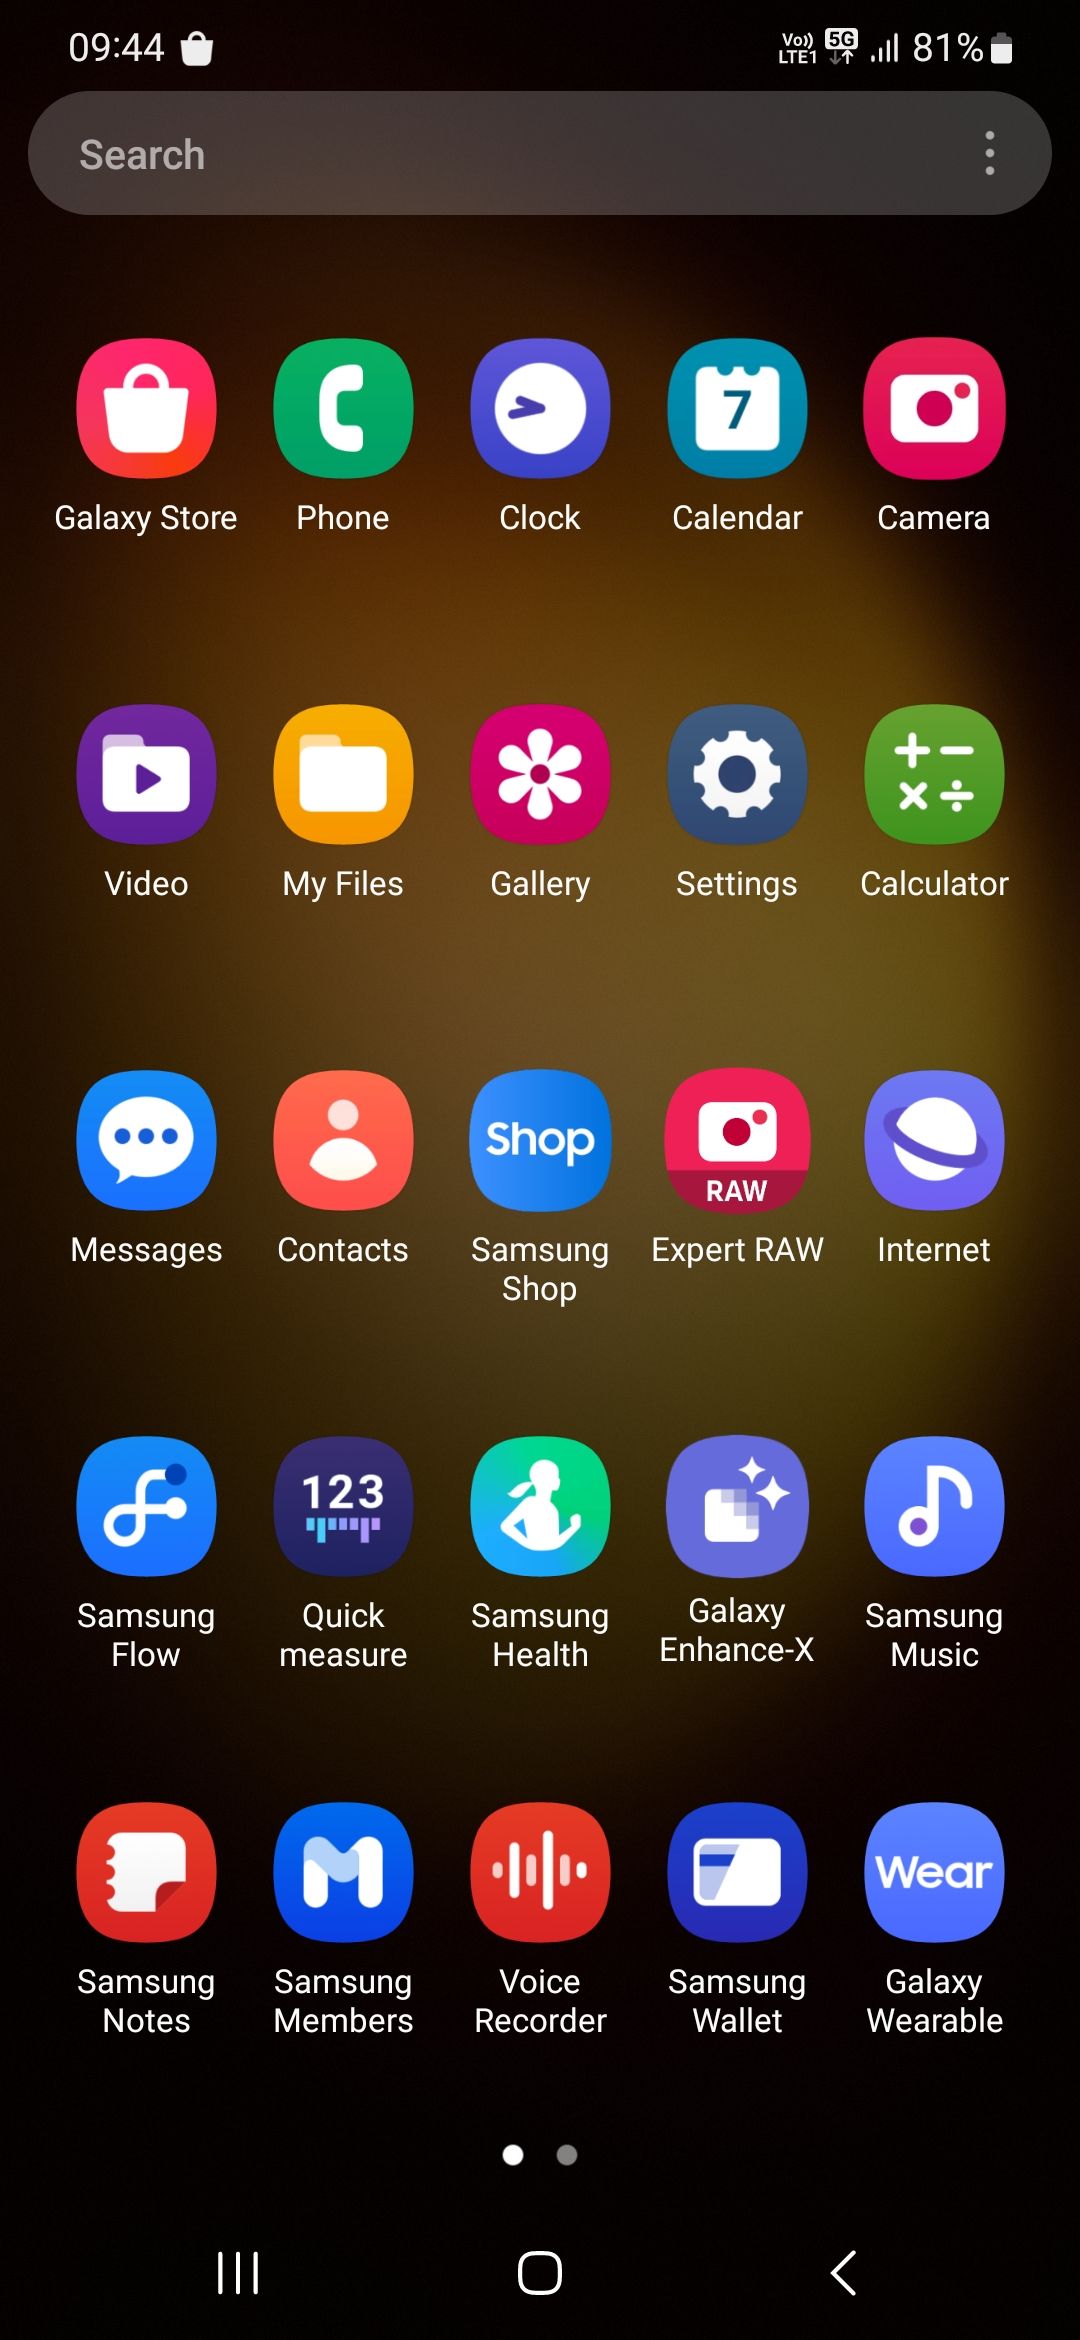 Samsung Apps - Samsung Members